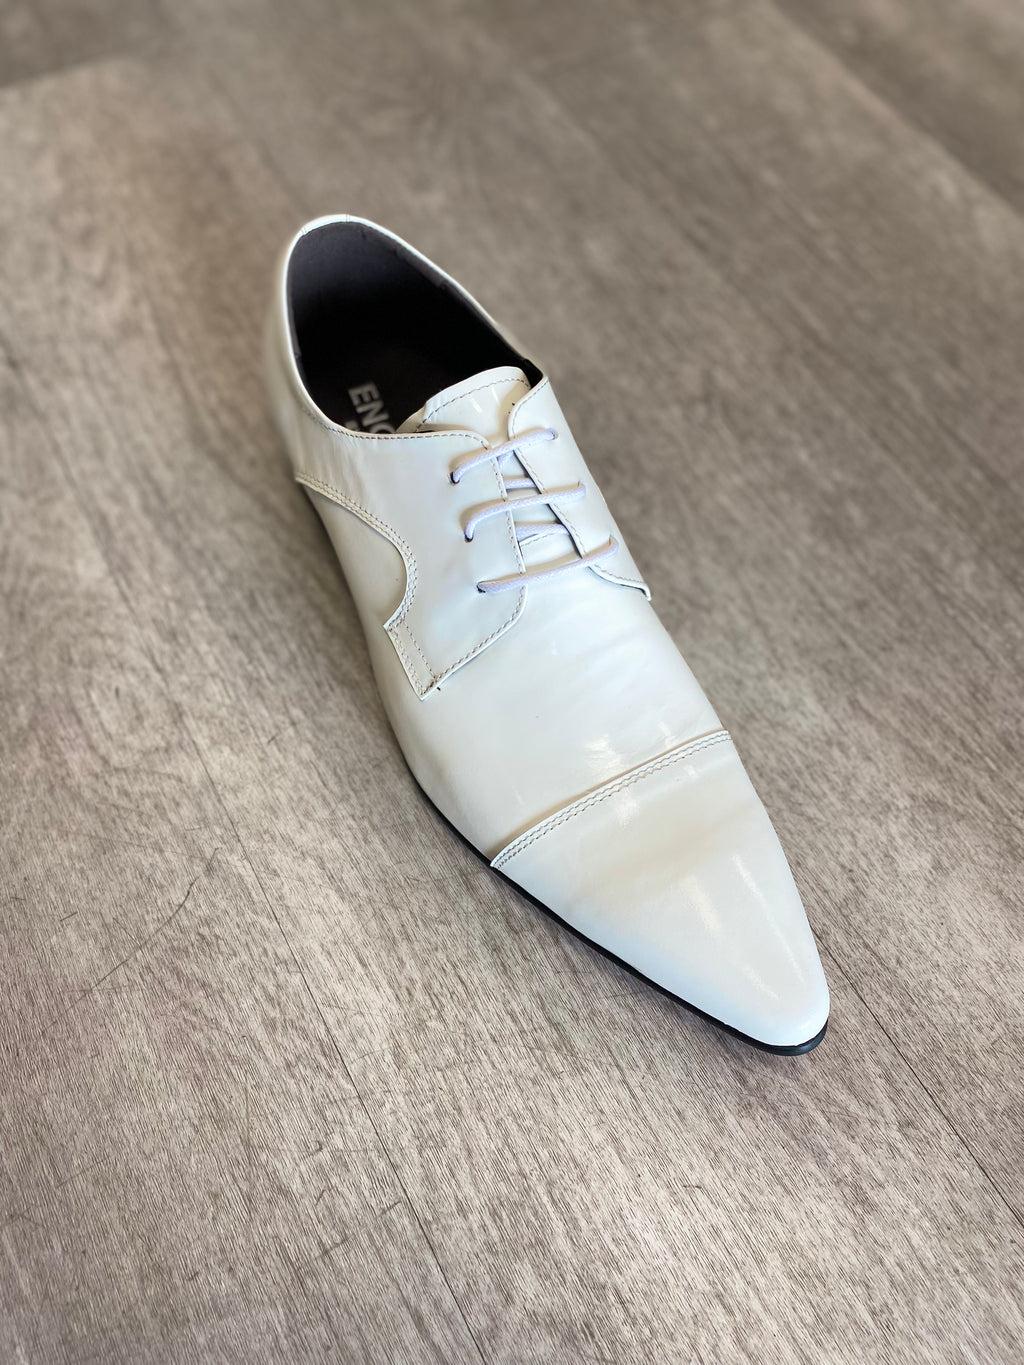 Fiesso Encore Dress Shoes - Off White - SIZE 9,10 (FINAL SALE)